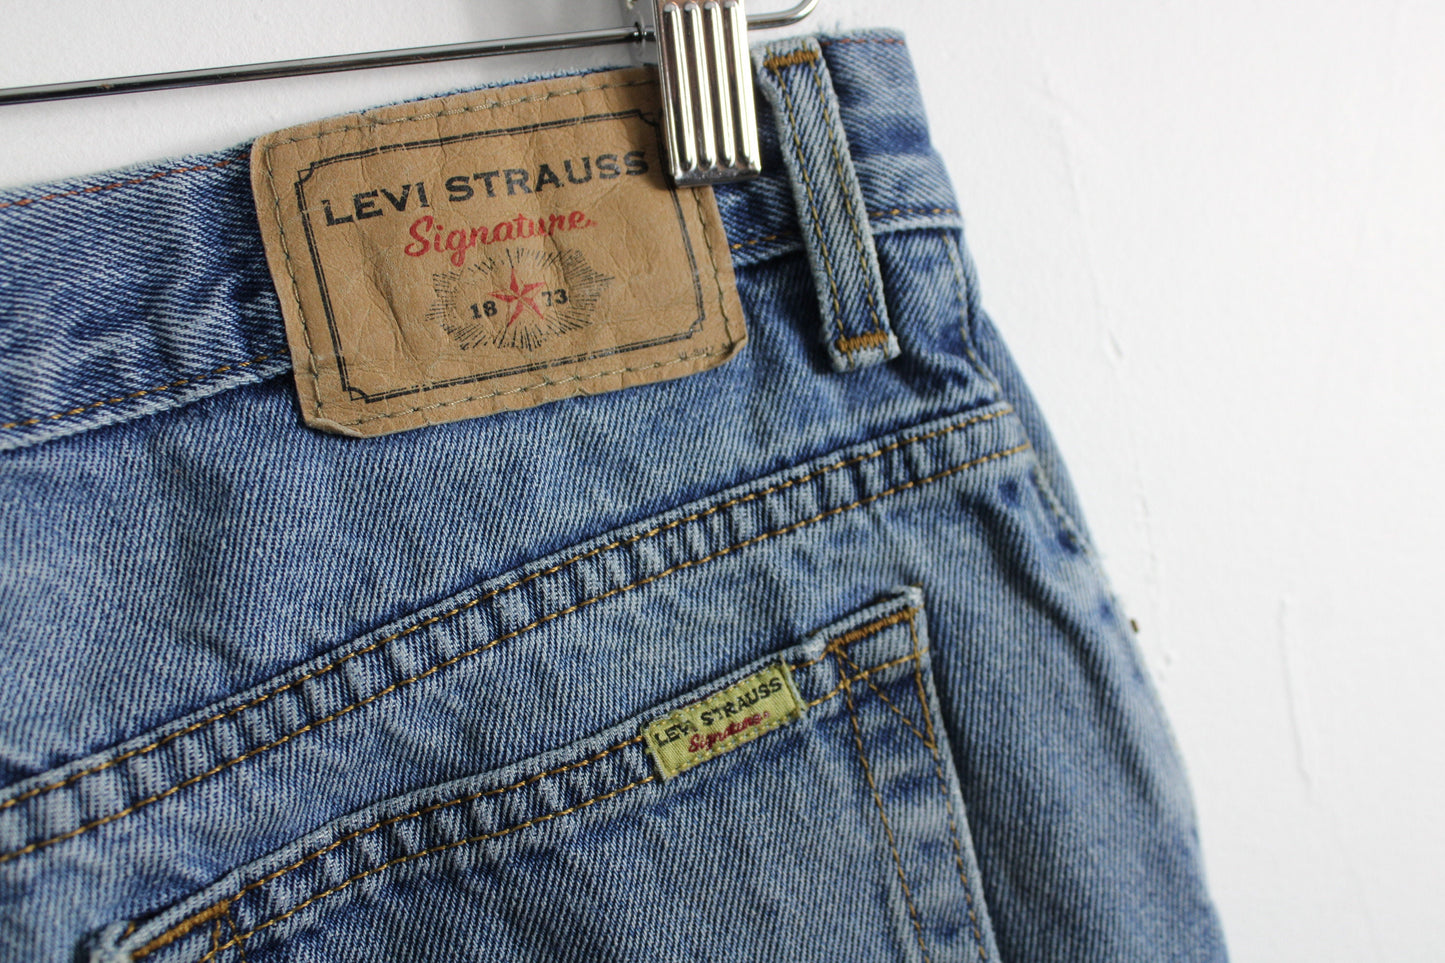 Levis Jean Shorts / 90s Vintage Blue Levi's Strauss Denim Jorts Streetwear / Hip Hop Clothing / Size 31x32